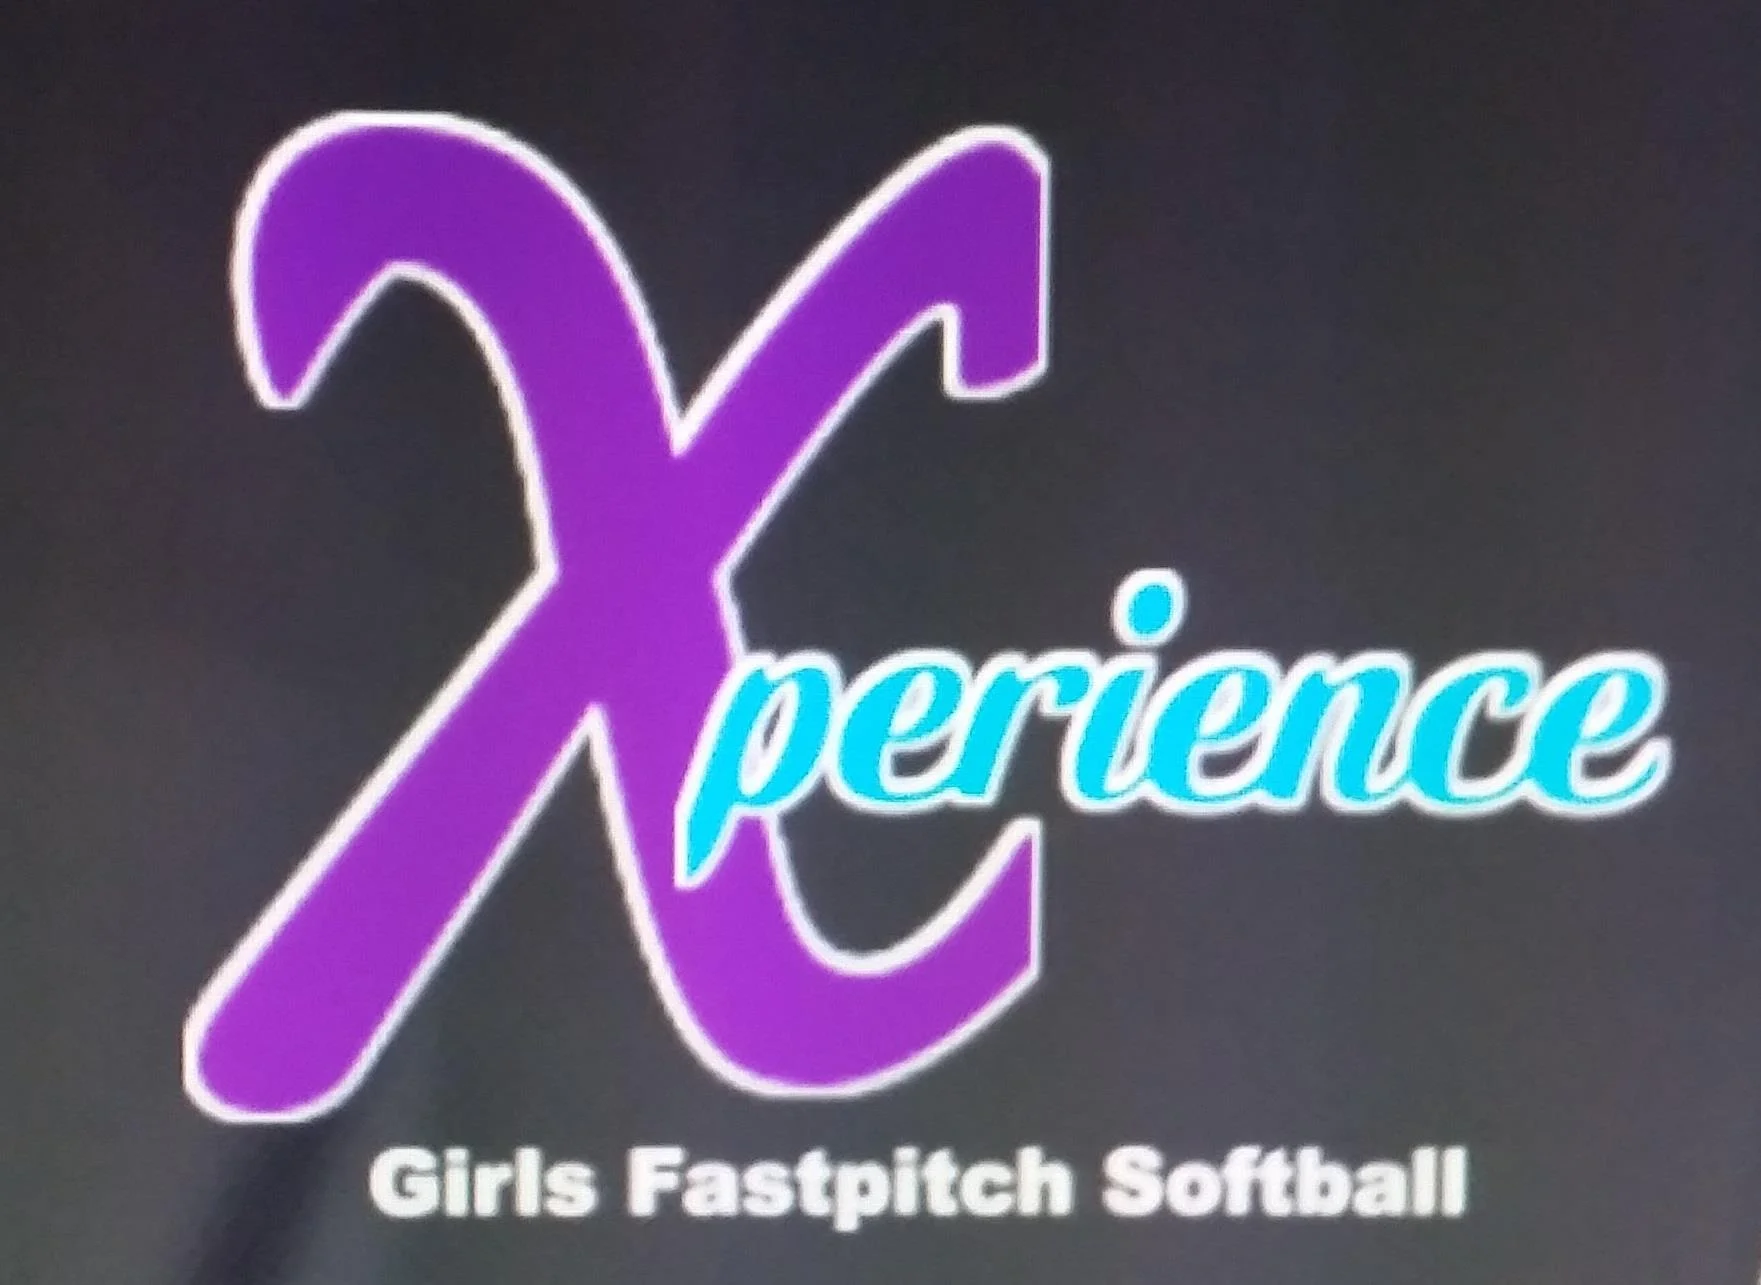 Xperience Softball